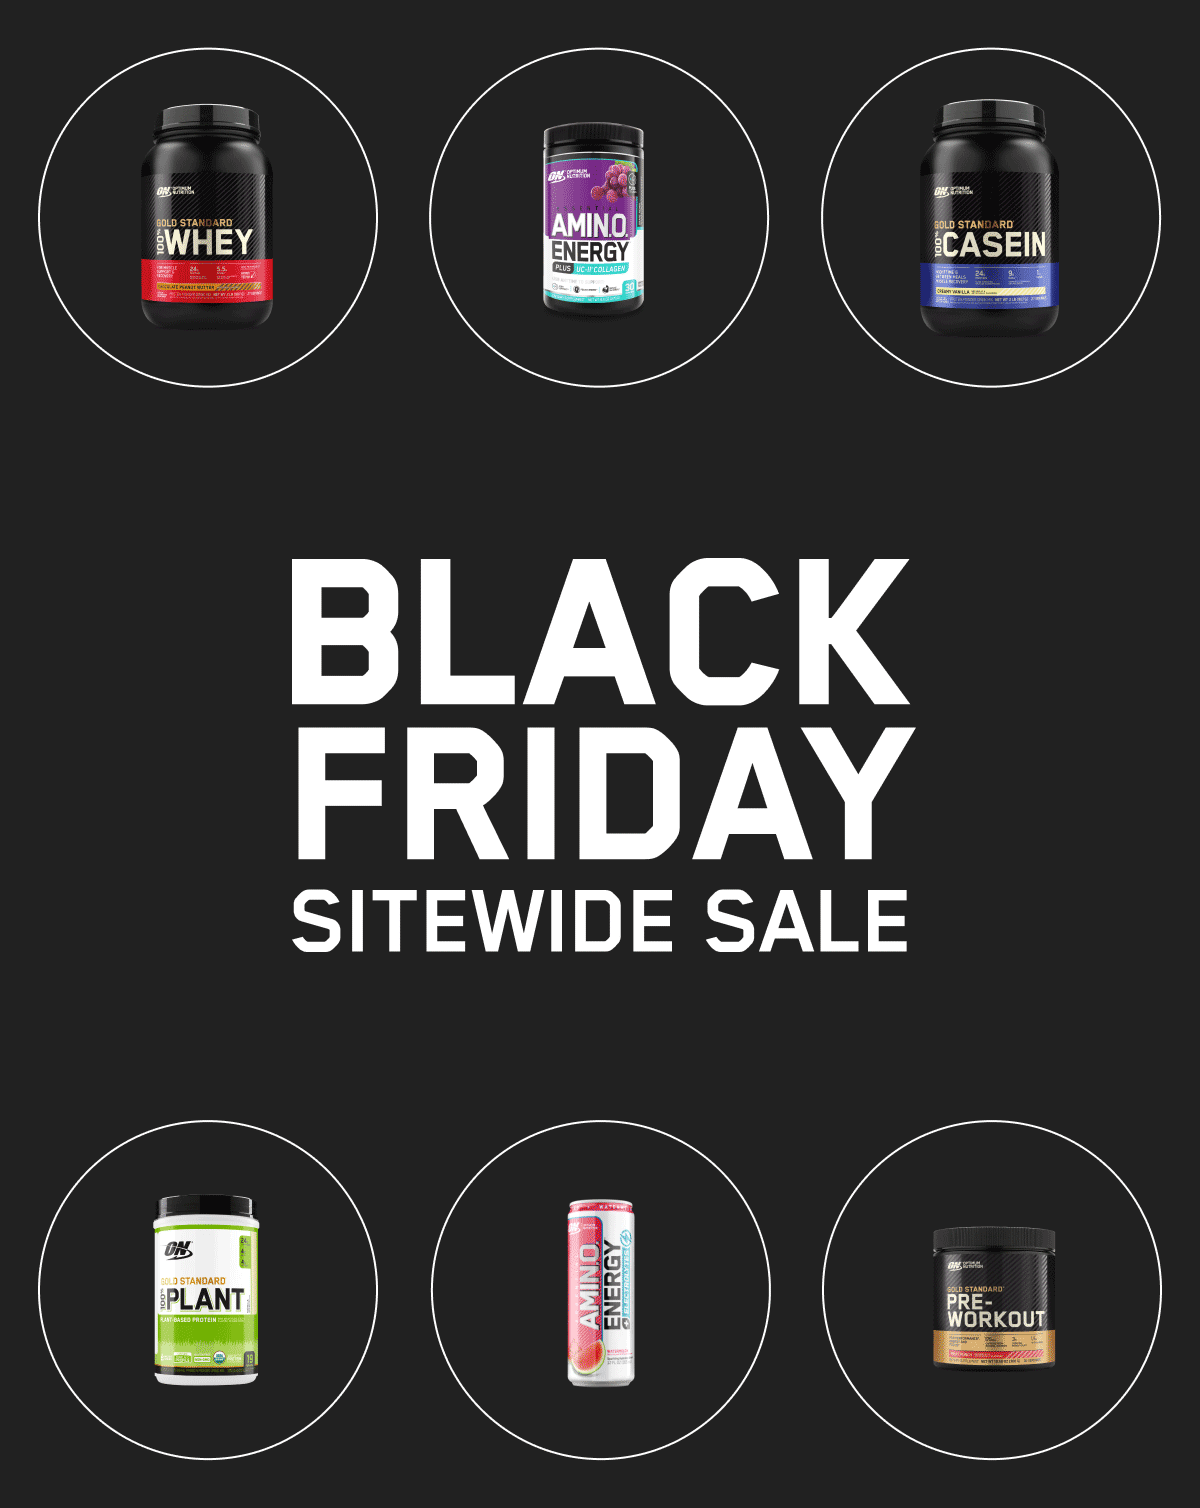 Black Friday Sitewide Sale 30% Off Everything *Offer Valid Until 11/30/2020